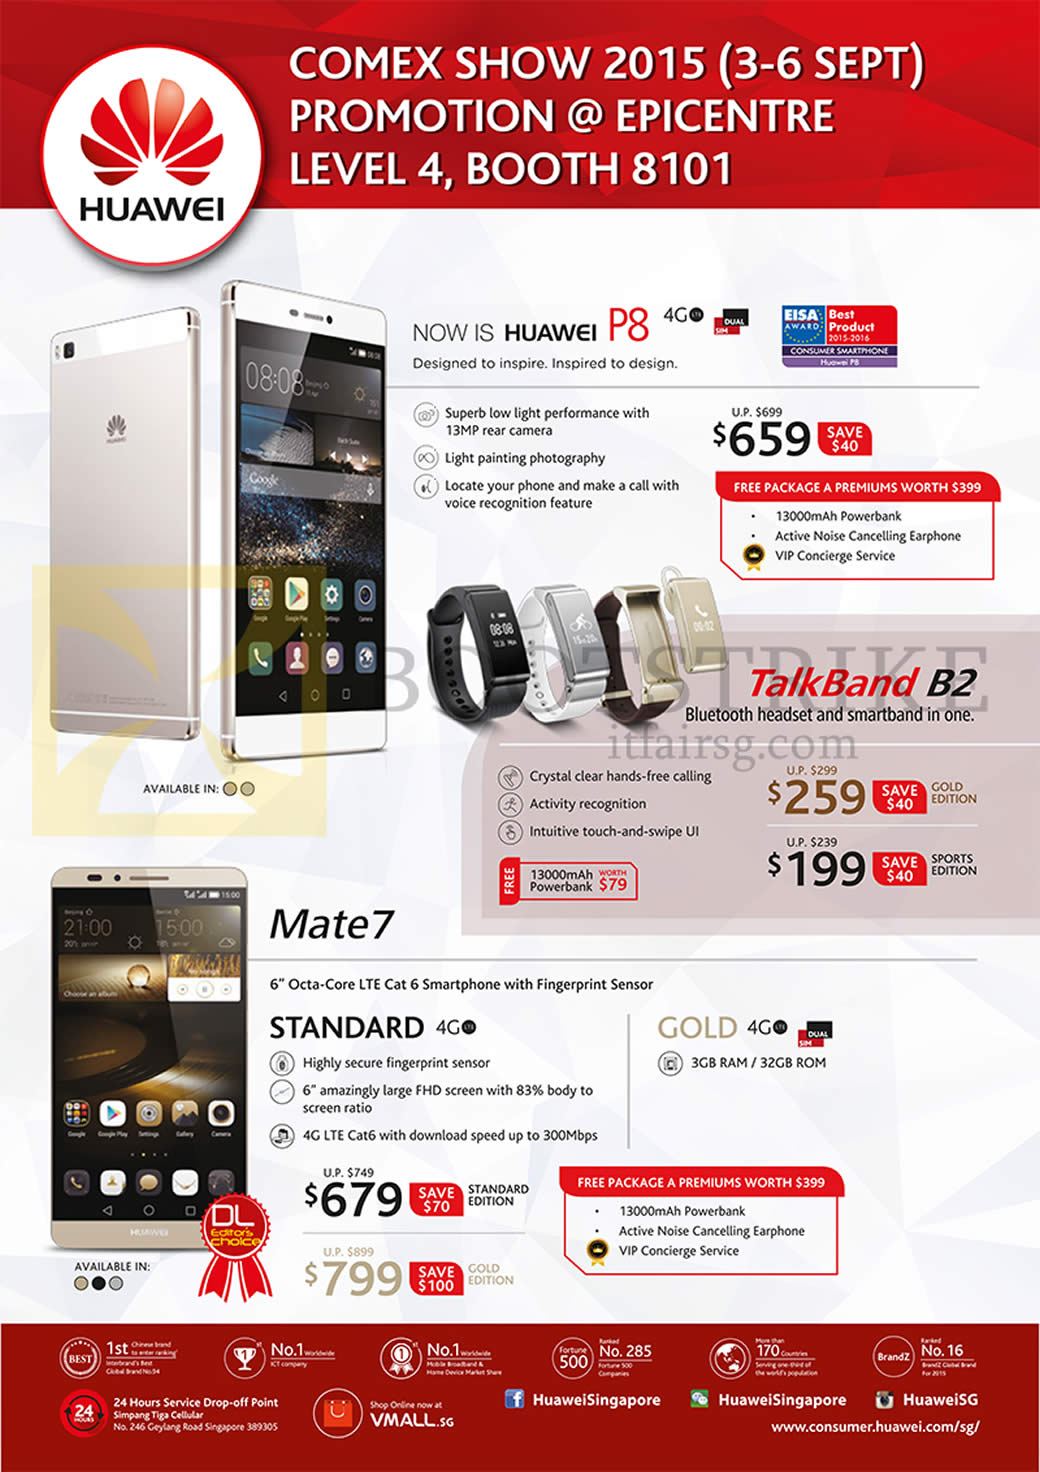 COMEX 2015 price list image brochure of Huawei Mobile Phones, Tablet, Huawei P8, Mate 7, TalkBand B2